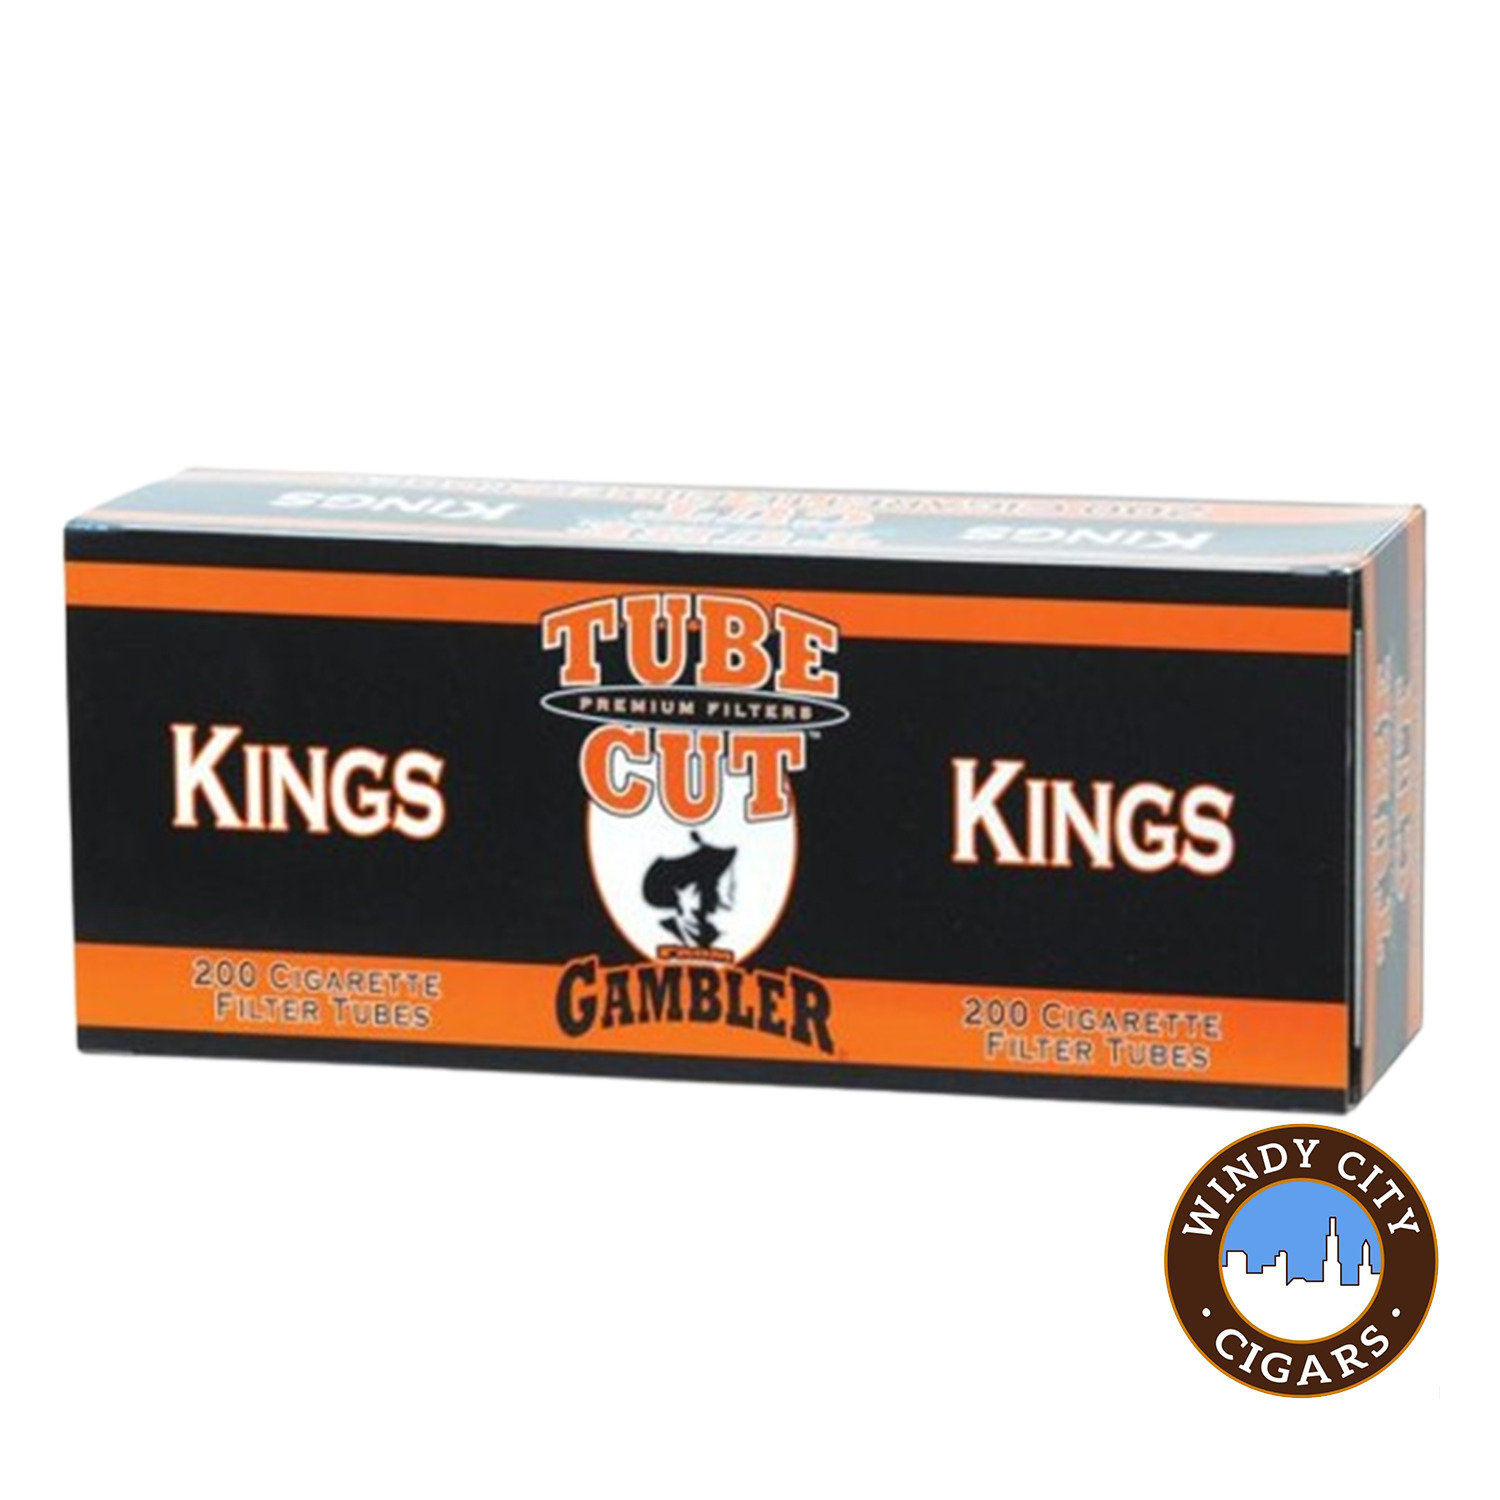 Tube Cut Regular King Cigarette 200ct Tubes - 10 Boxes